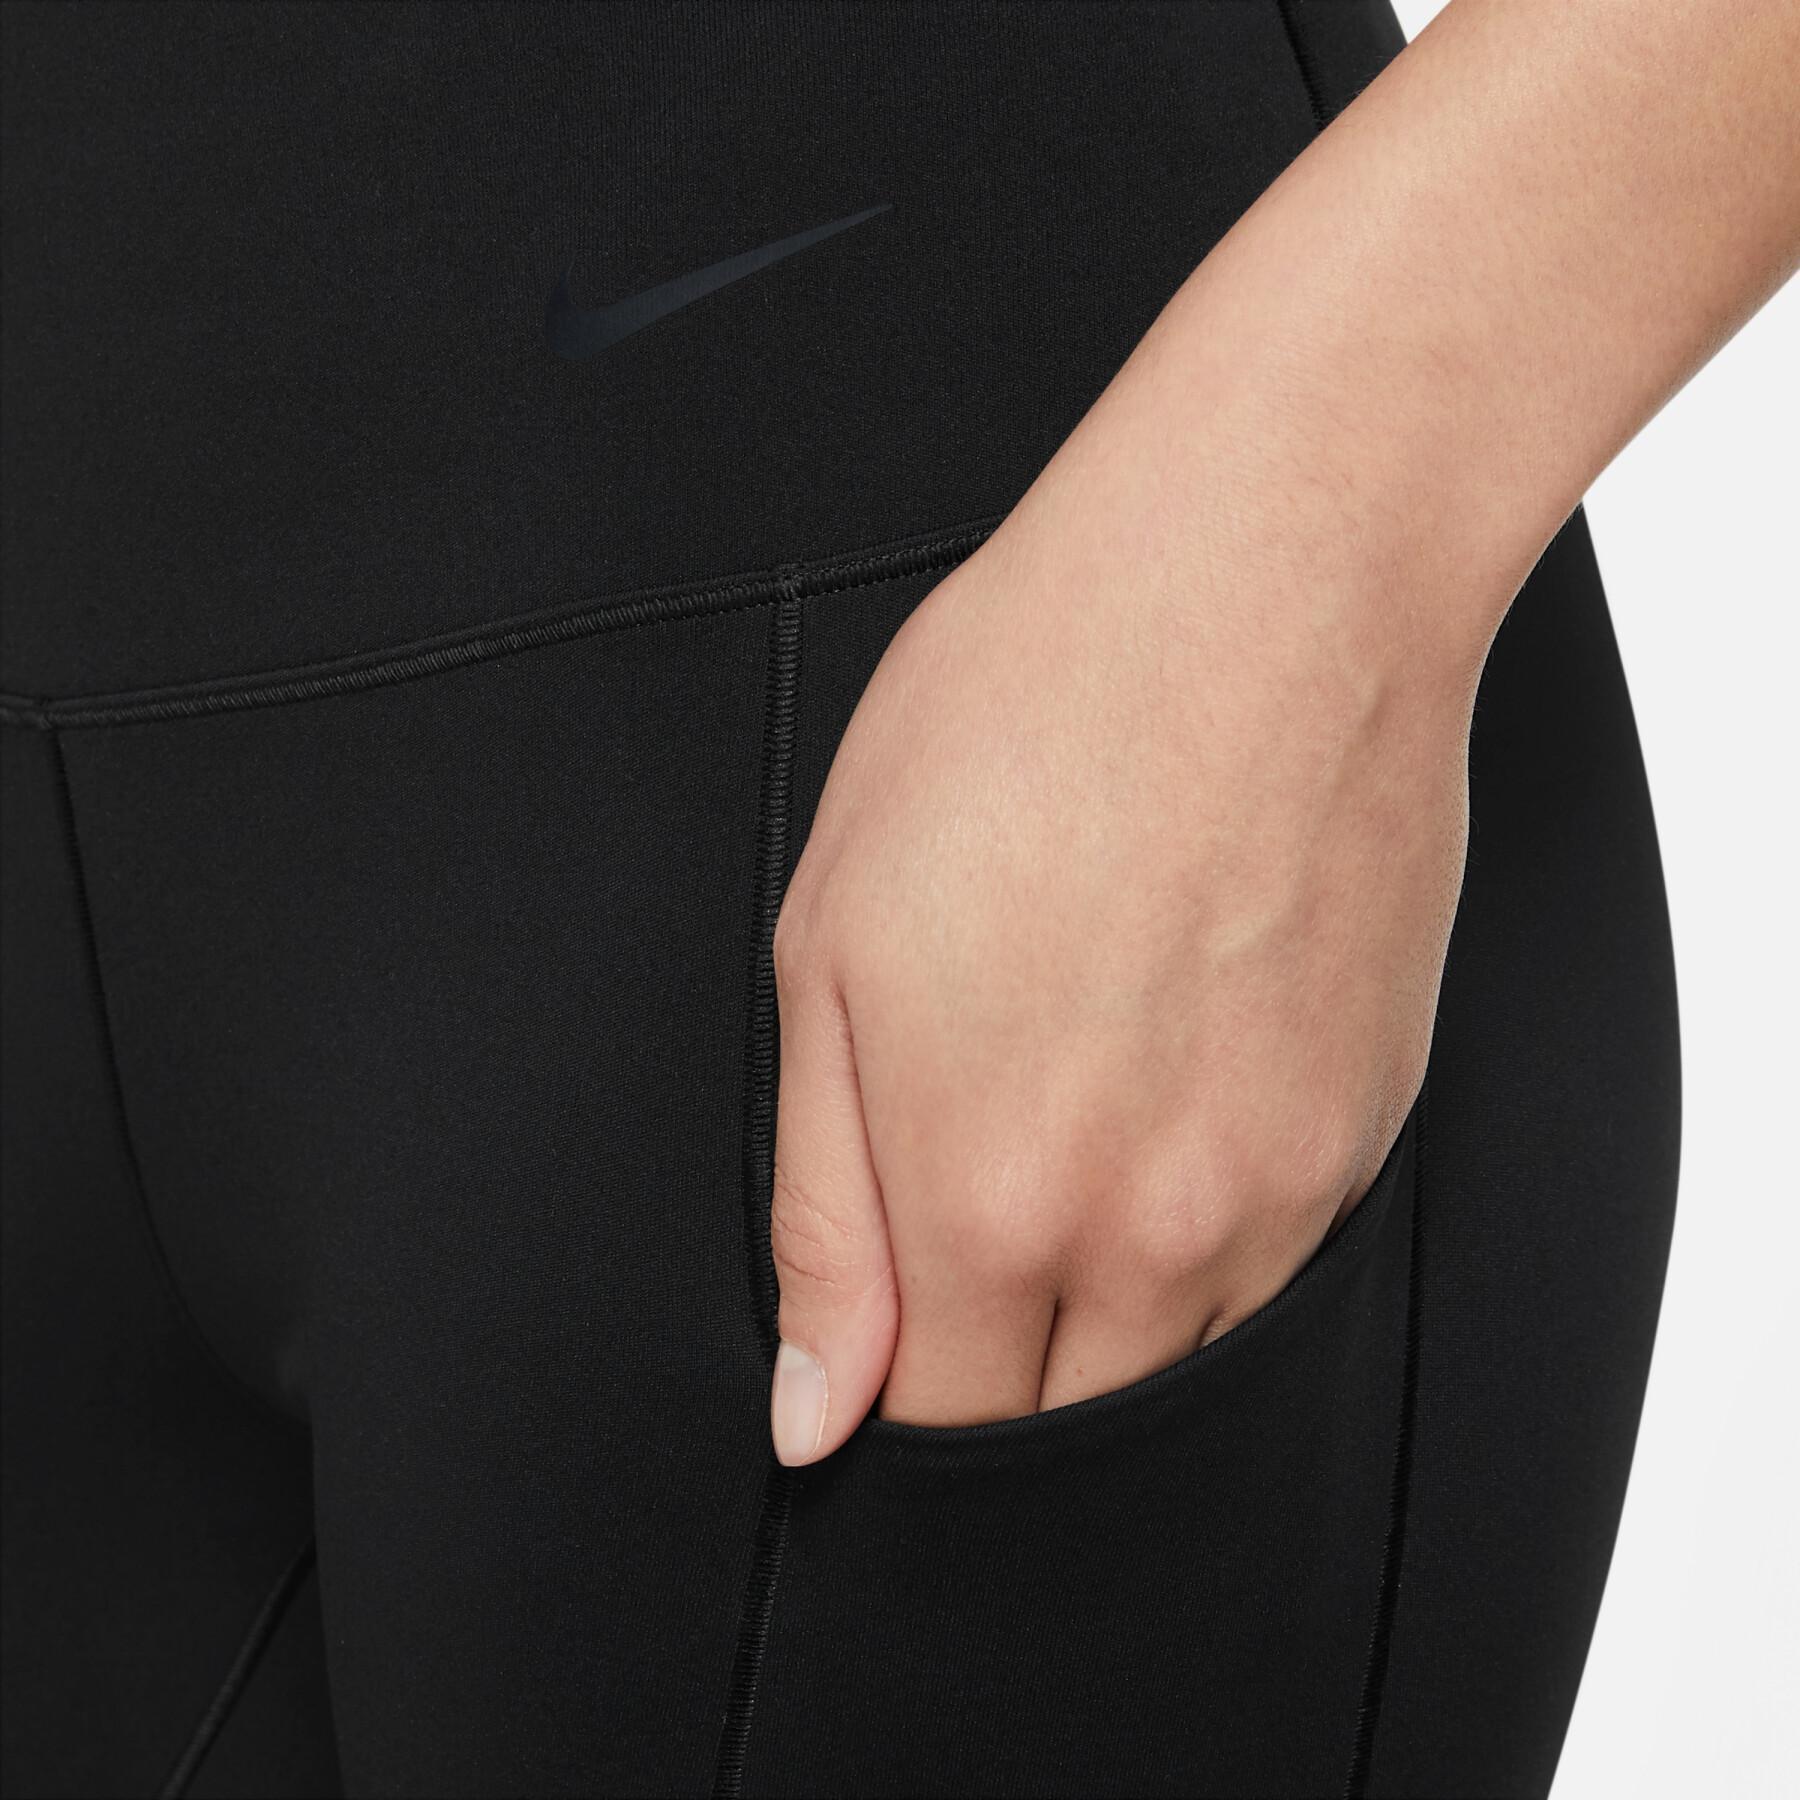 high waist legging femme Nike Dri-FIT Universa